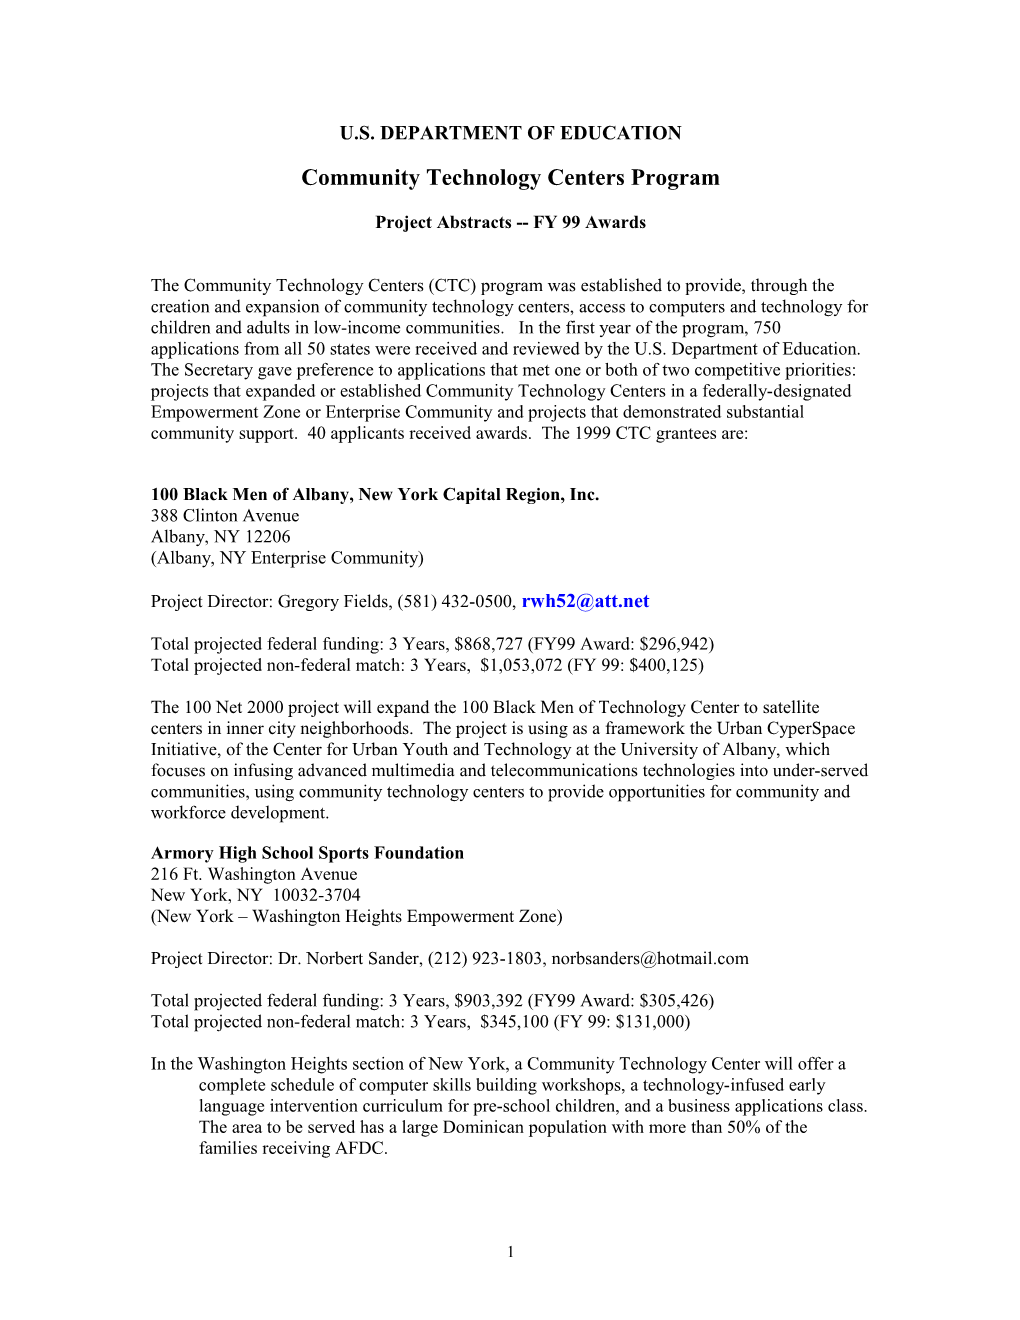 Community Technology Centers Program